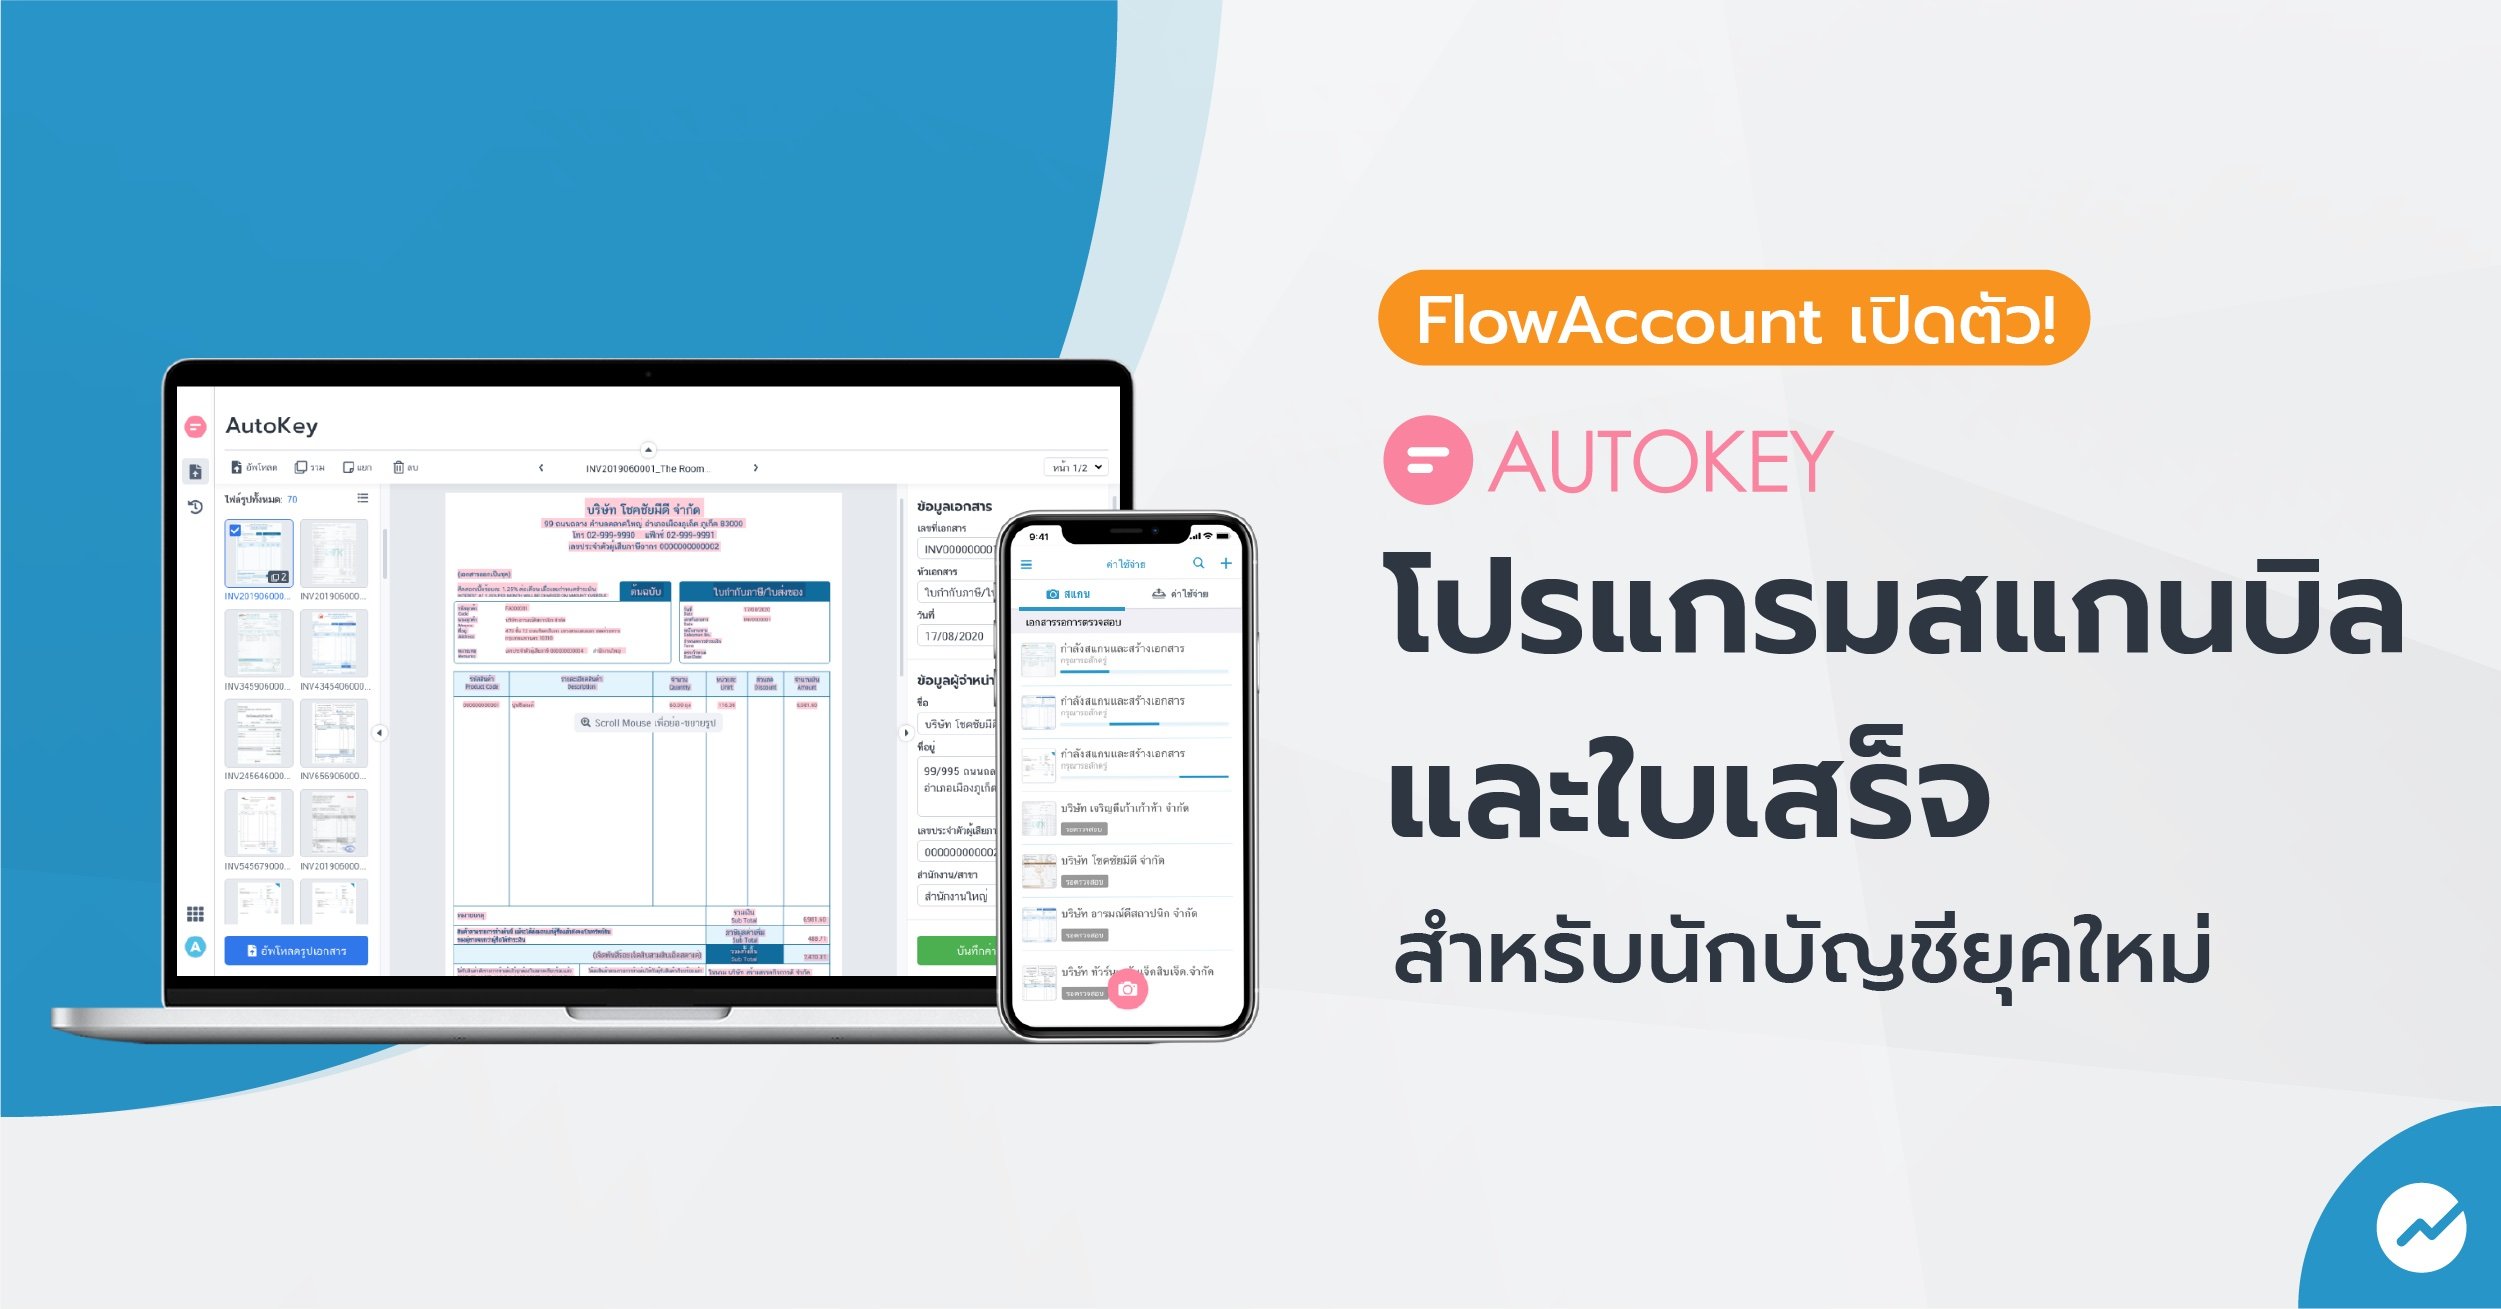 FlowAccount เปิดตัว AutoKey ผสานเทคโนโลยีสแกนบิล พร้อมทำบัญชีค่าใช้จ่าย และเก็บไฟล์เอกสารในที่เดียว